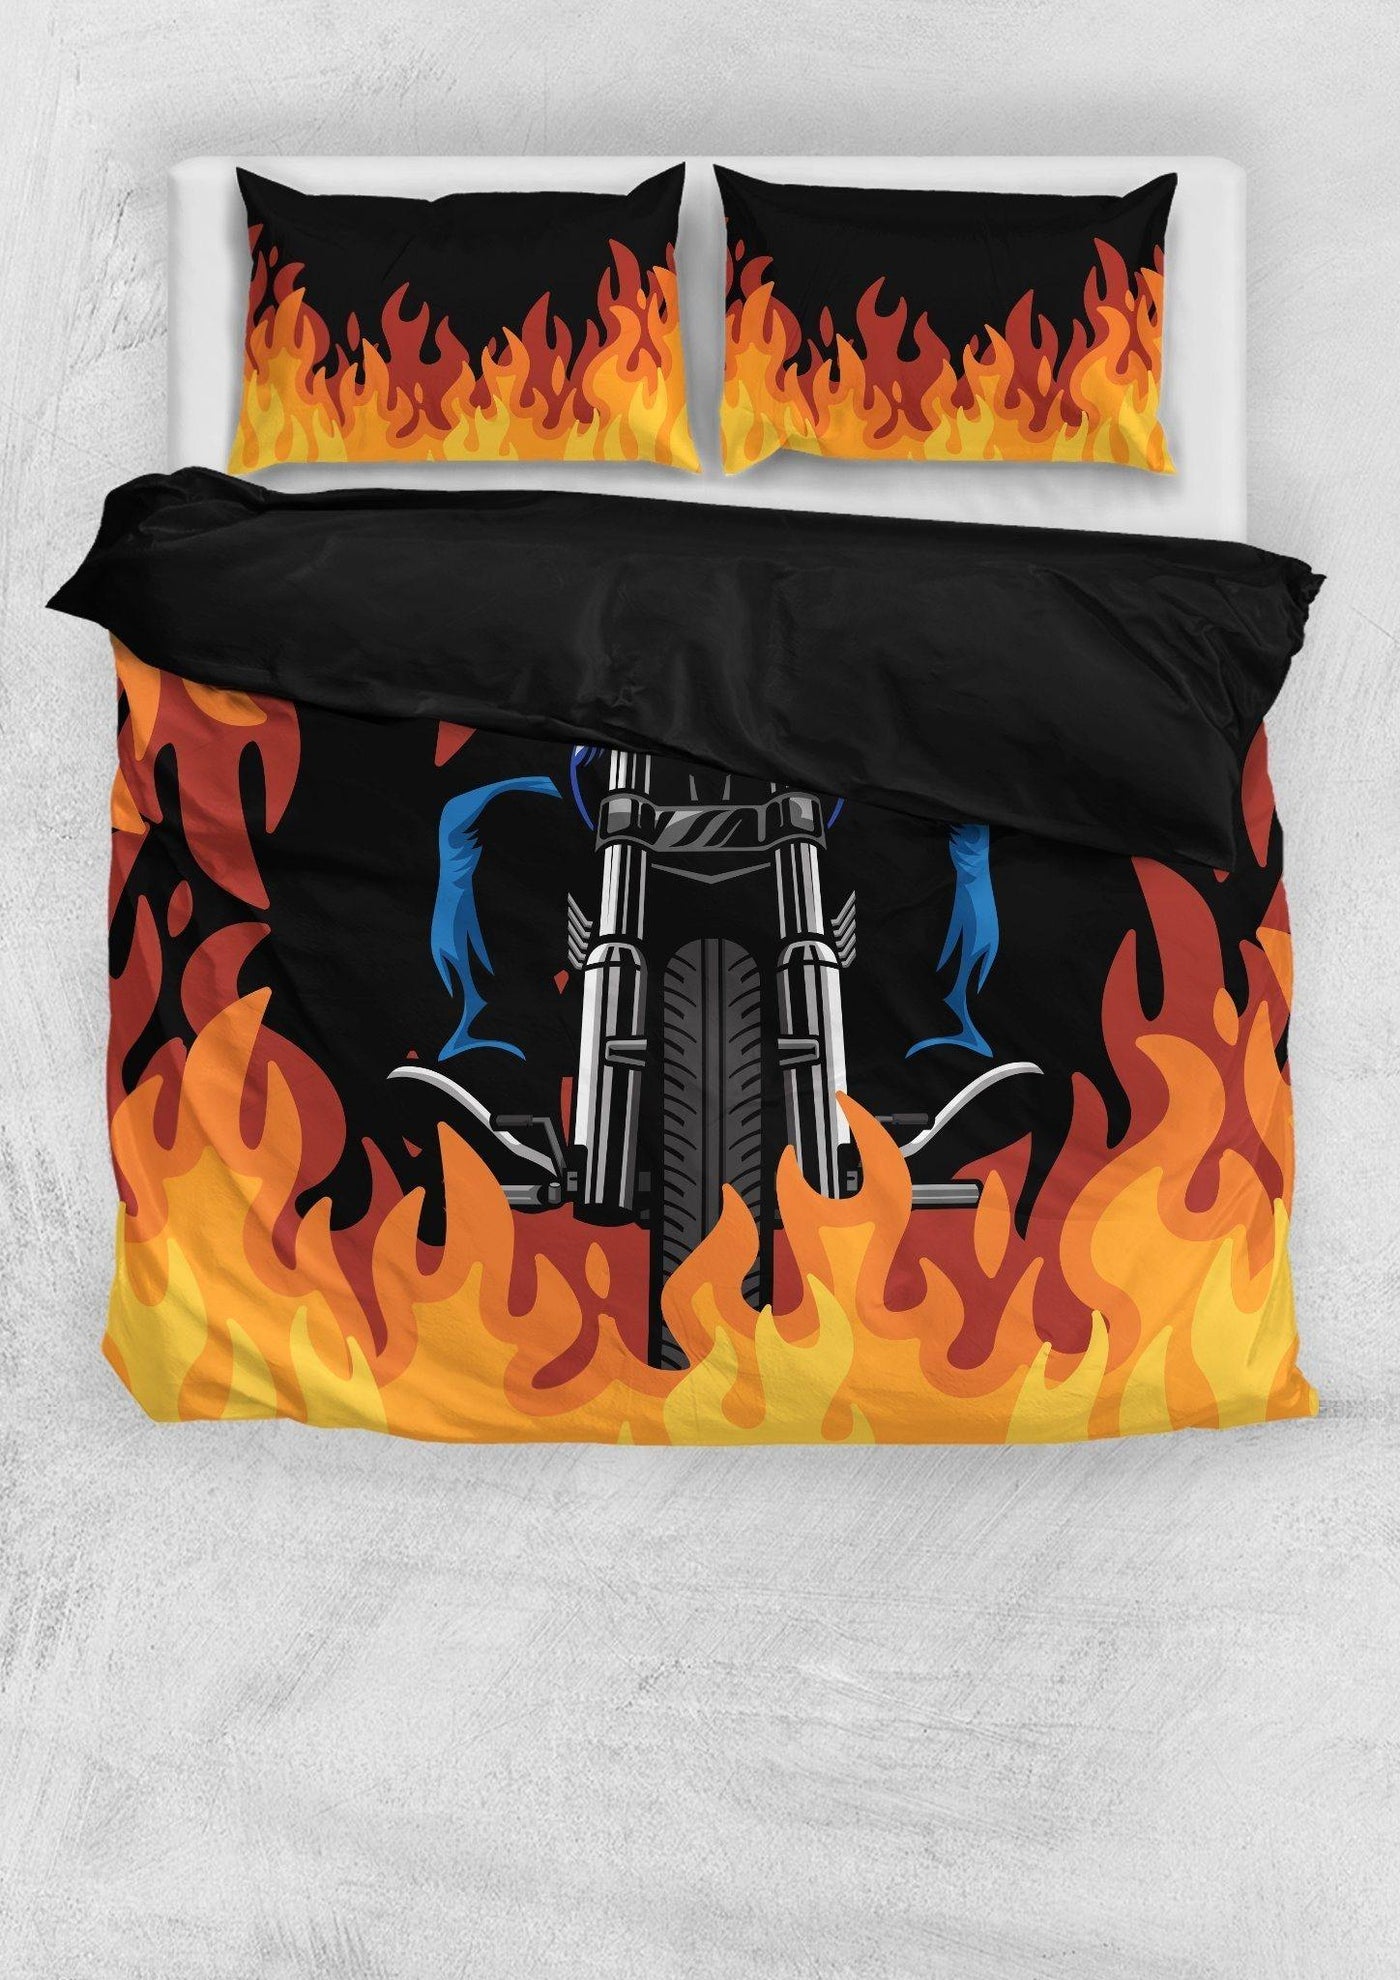 Mad Rider Bedding Set (1 Duvet Cover, 2 Pillowcases), Brushed Polyester, Black/Orange - American Legend Rider